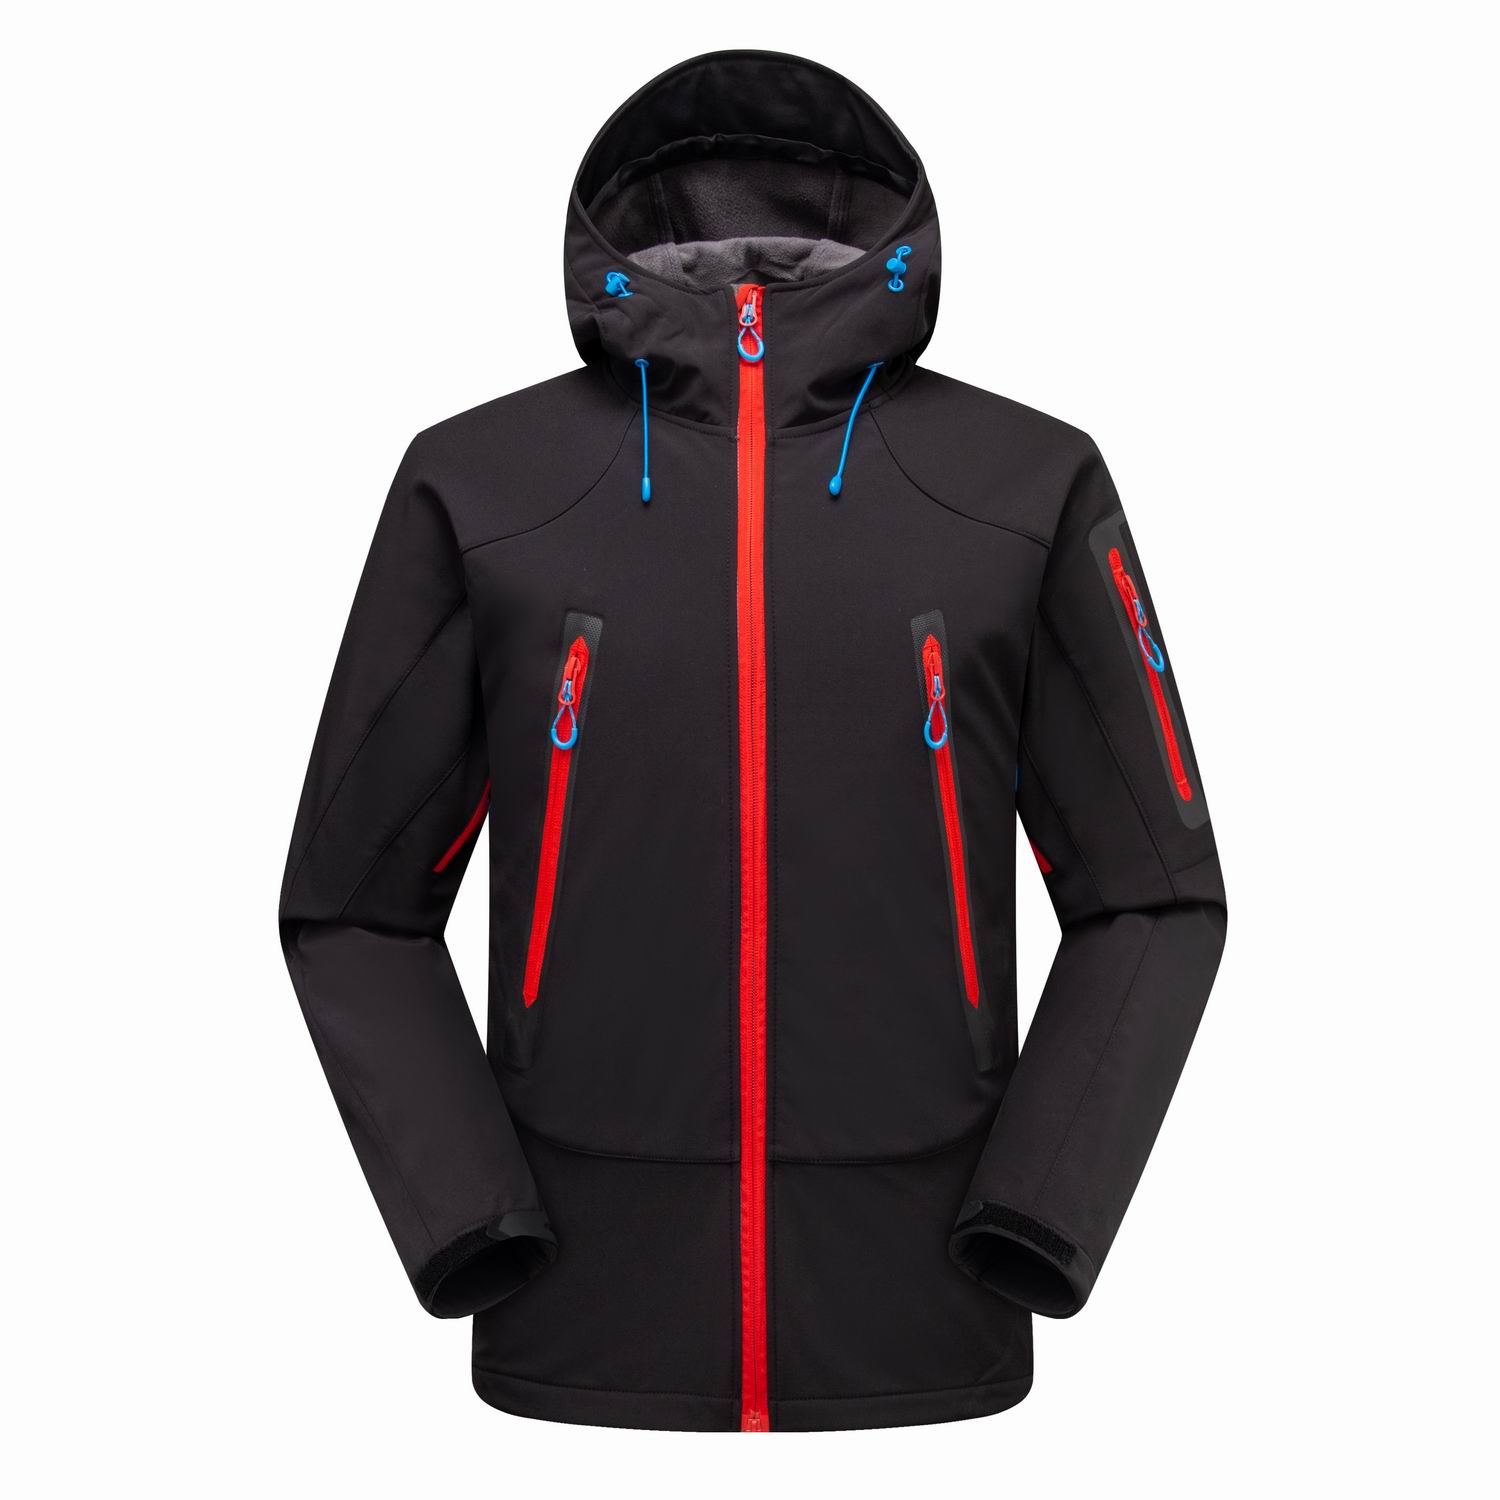 

2021 new The mens Helly Jackets Hoodies Fashion Casual Warm Windproof Ski Coats Outdoors Denali Fleece Hansen Jackets Suits S-XXL BLUE 1460, Orange